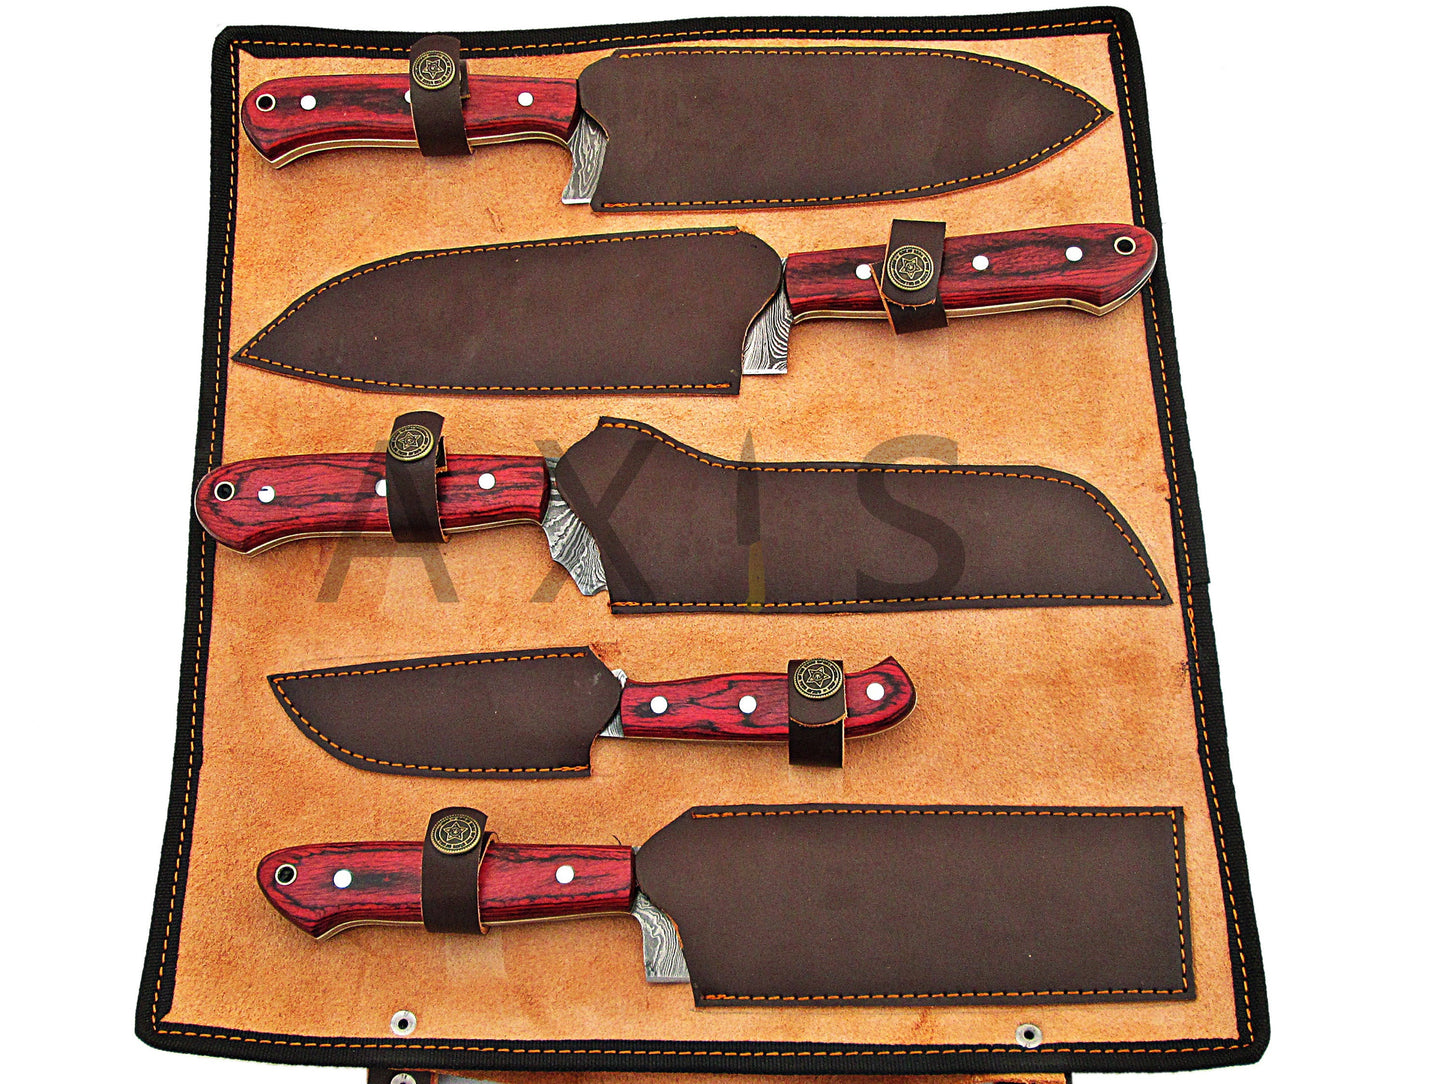 Damascus Steel Chef Knife, Damascus Knife Set, Kitchen Knife, Handmade Knife, Hand Forged Knife, Christmas Gift, Chef Gift, Butcher Knife